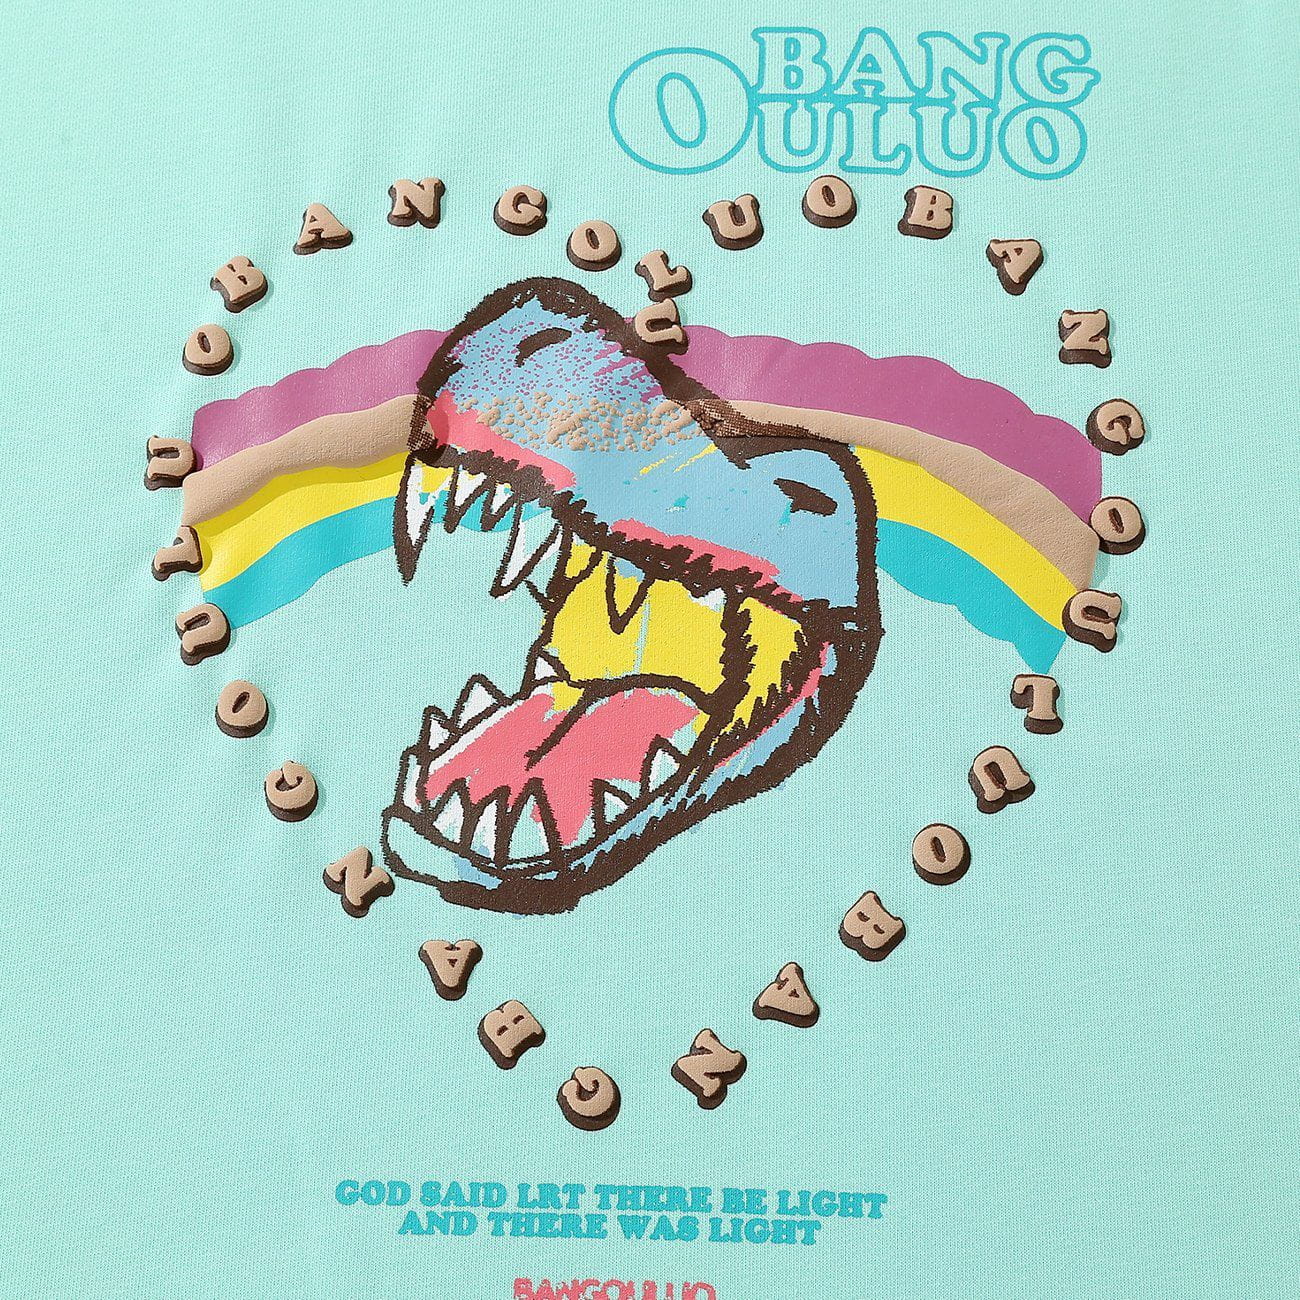 LUXENFY™ - Rainbow Dinosaur Head Graphic Sweatshirt luxenfy.com